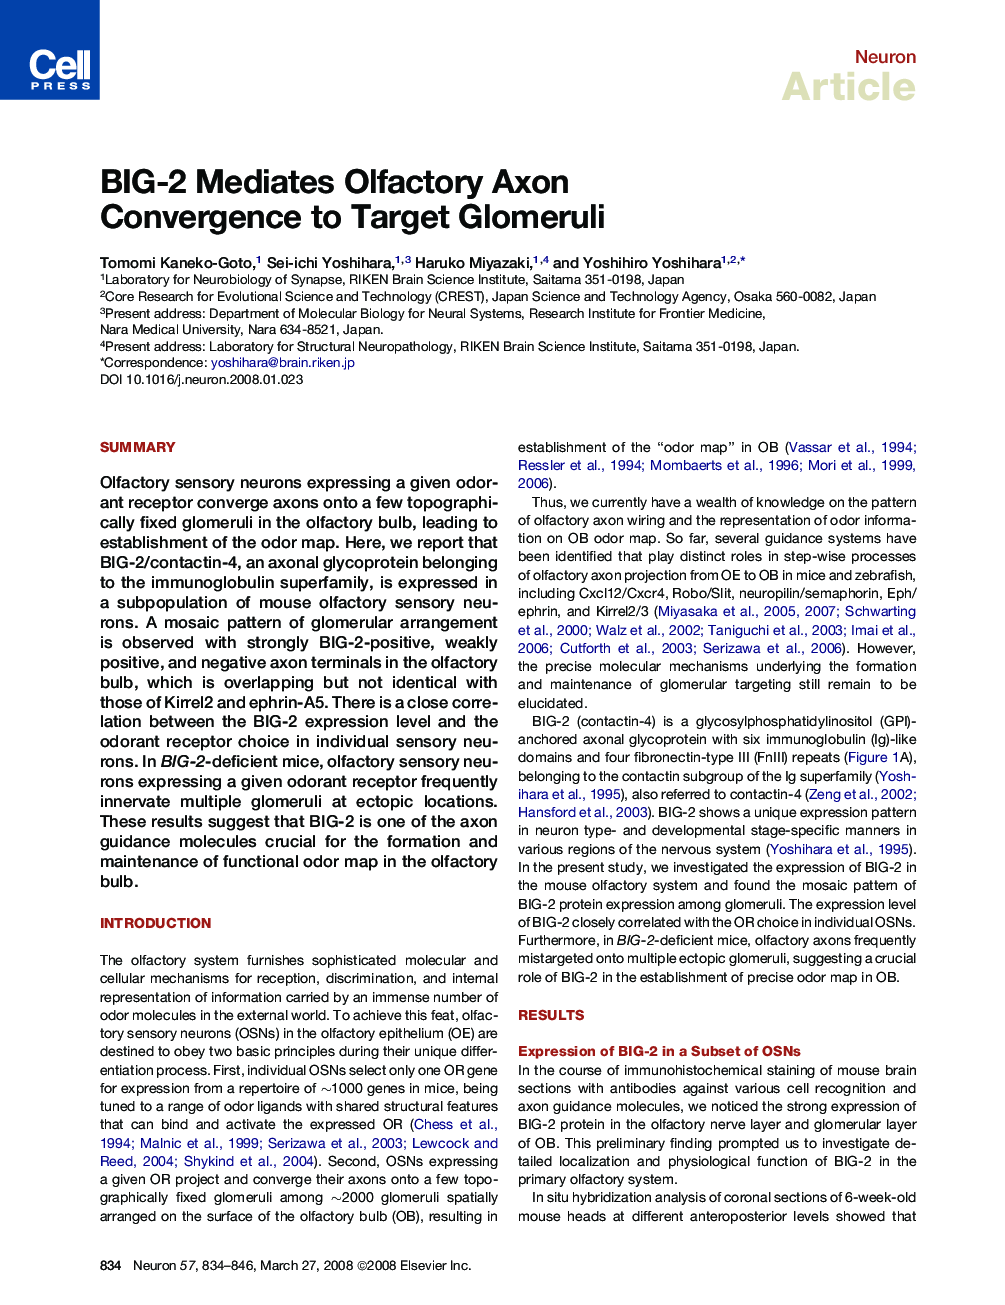 BIG-2 Mediates Olfactory Axon Convergence to Target Glomeruli